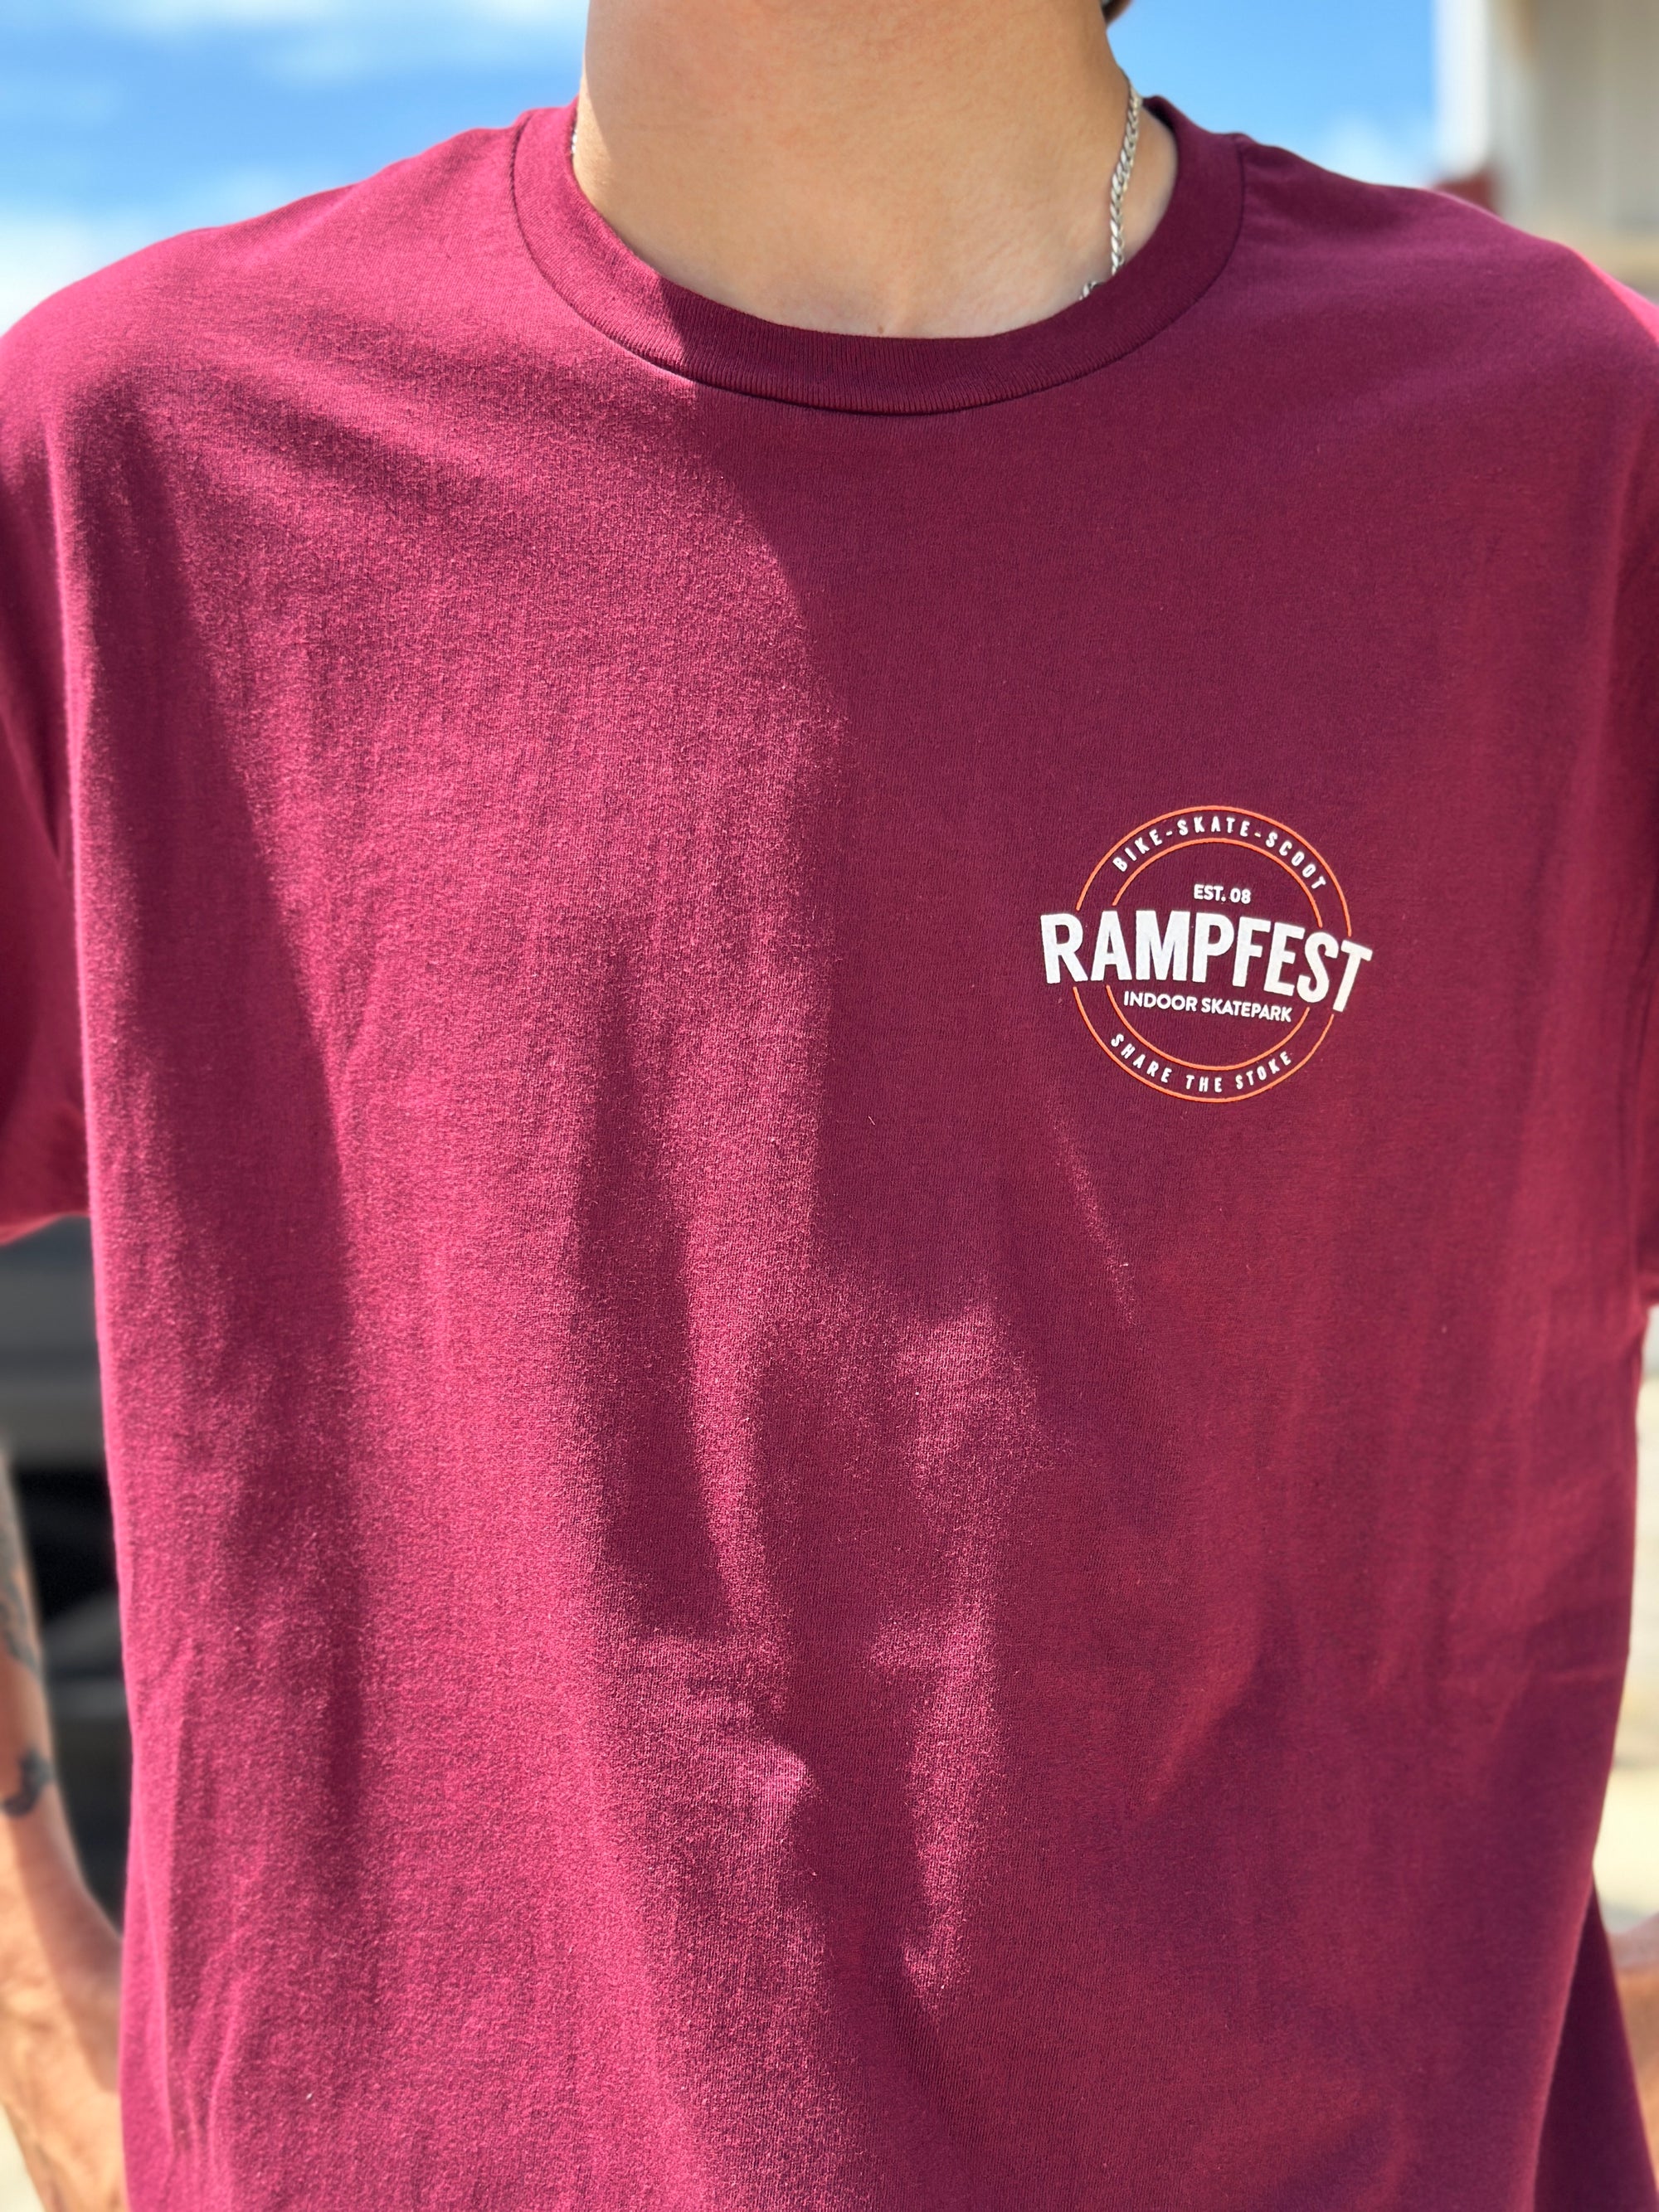 Rampfest Pocket Logo Shirt - Maroon